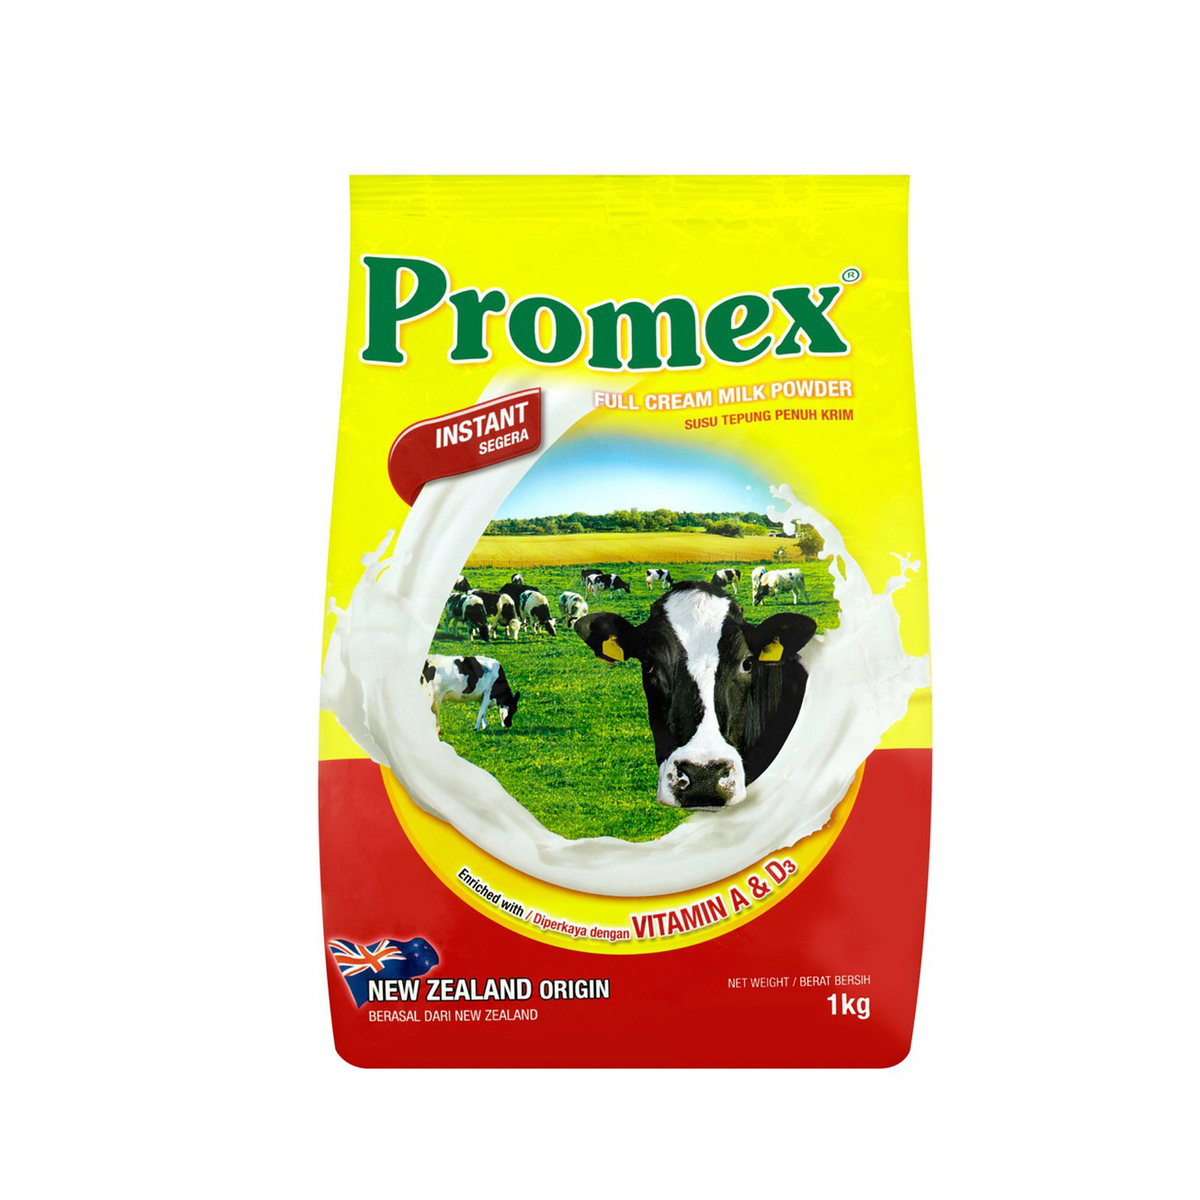 Промекс. Promex instant Milk Powder. Full Cream Milk Powder.